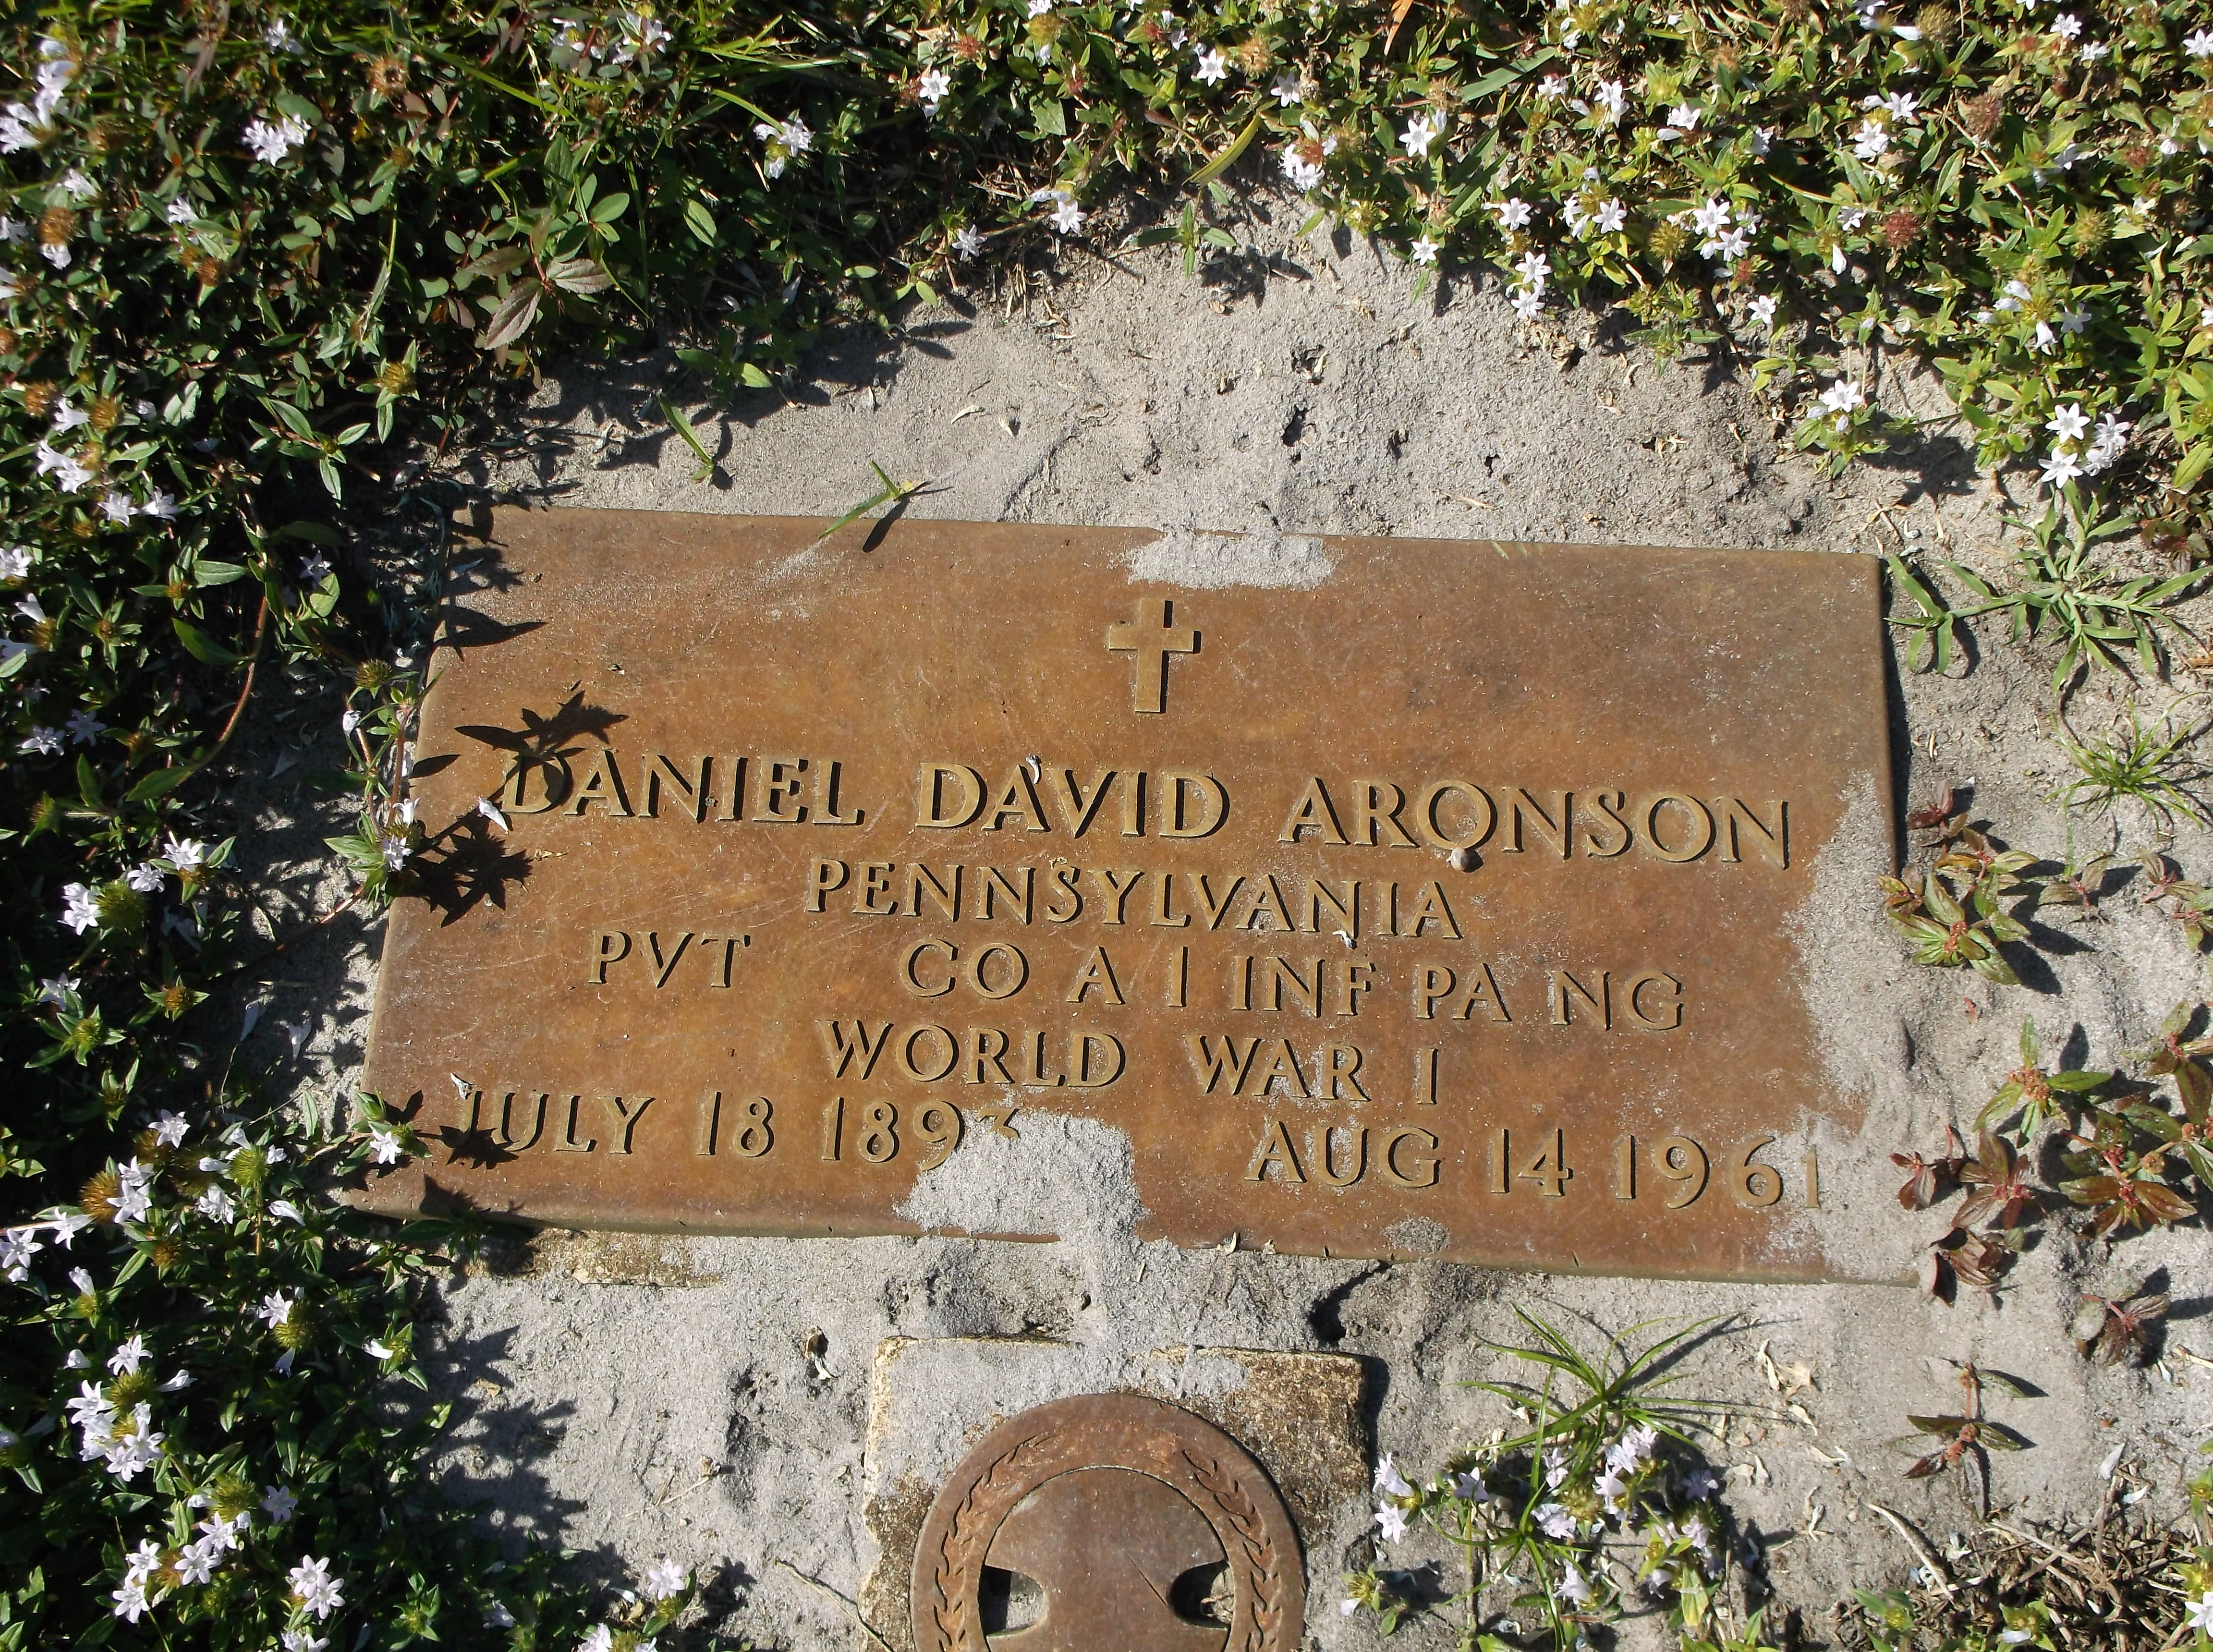 Daniel David Aronson